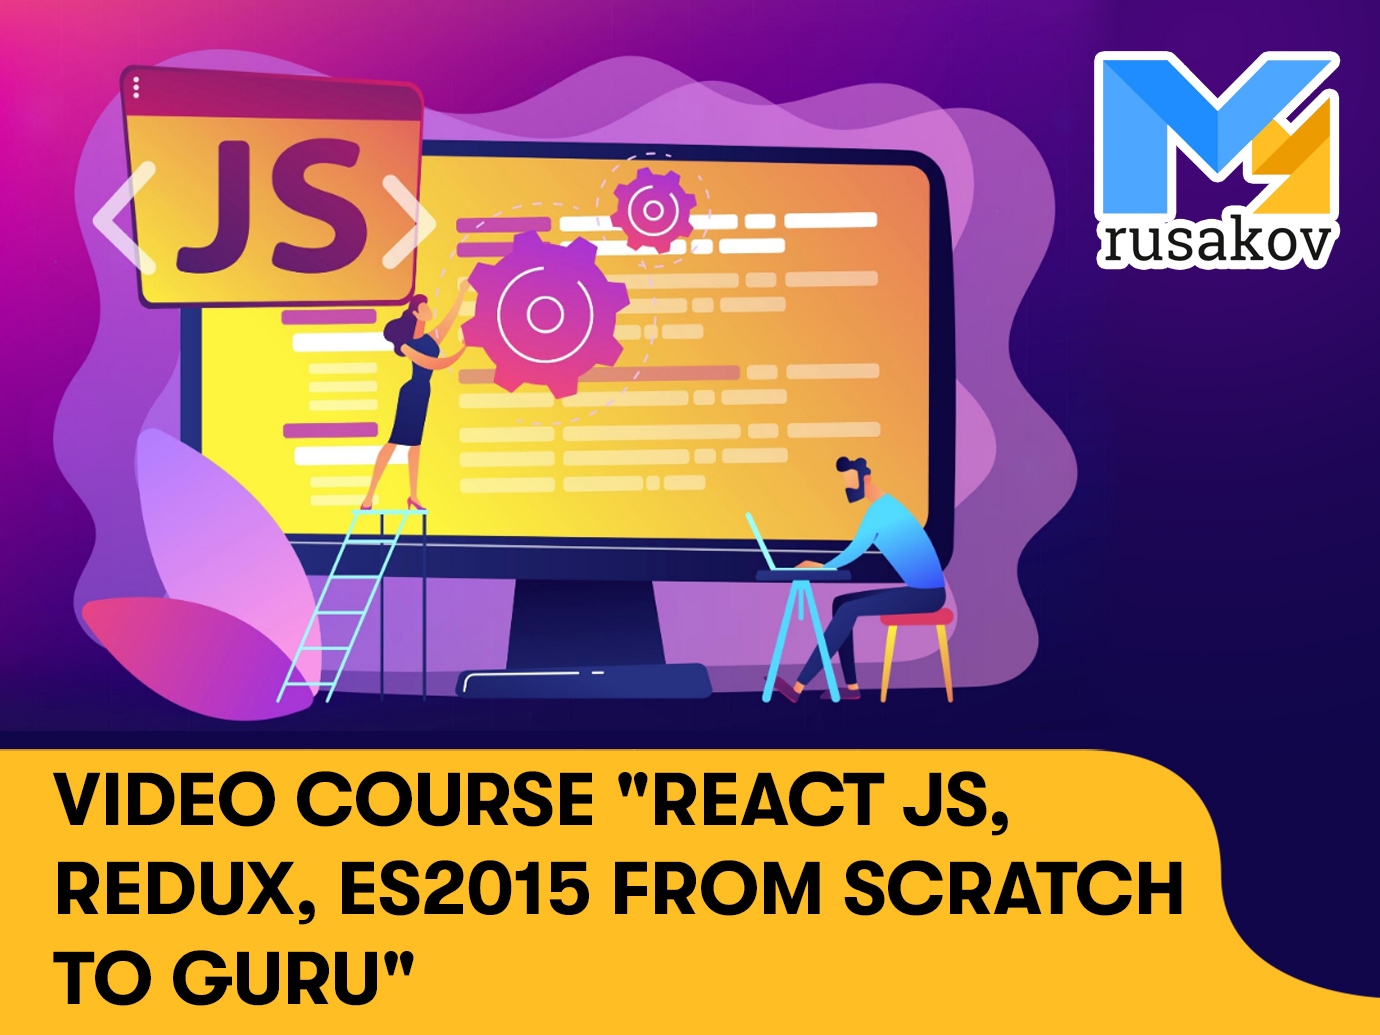 Video course “React JS, Redux, ES2015 from Scratch to Guru“